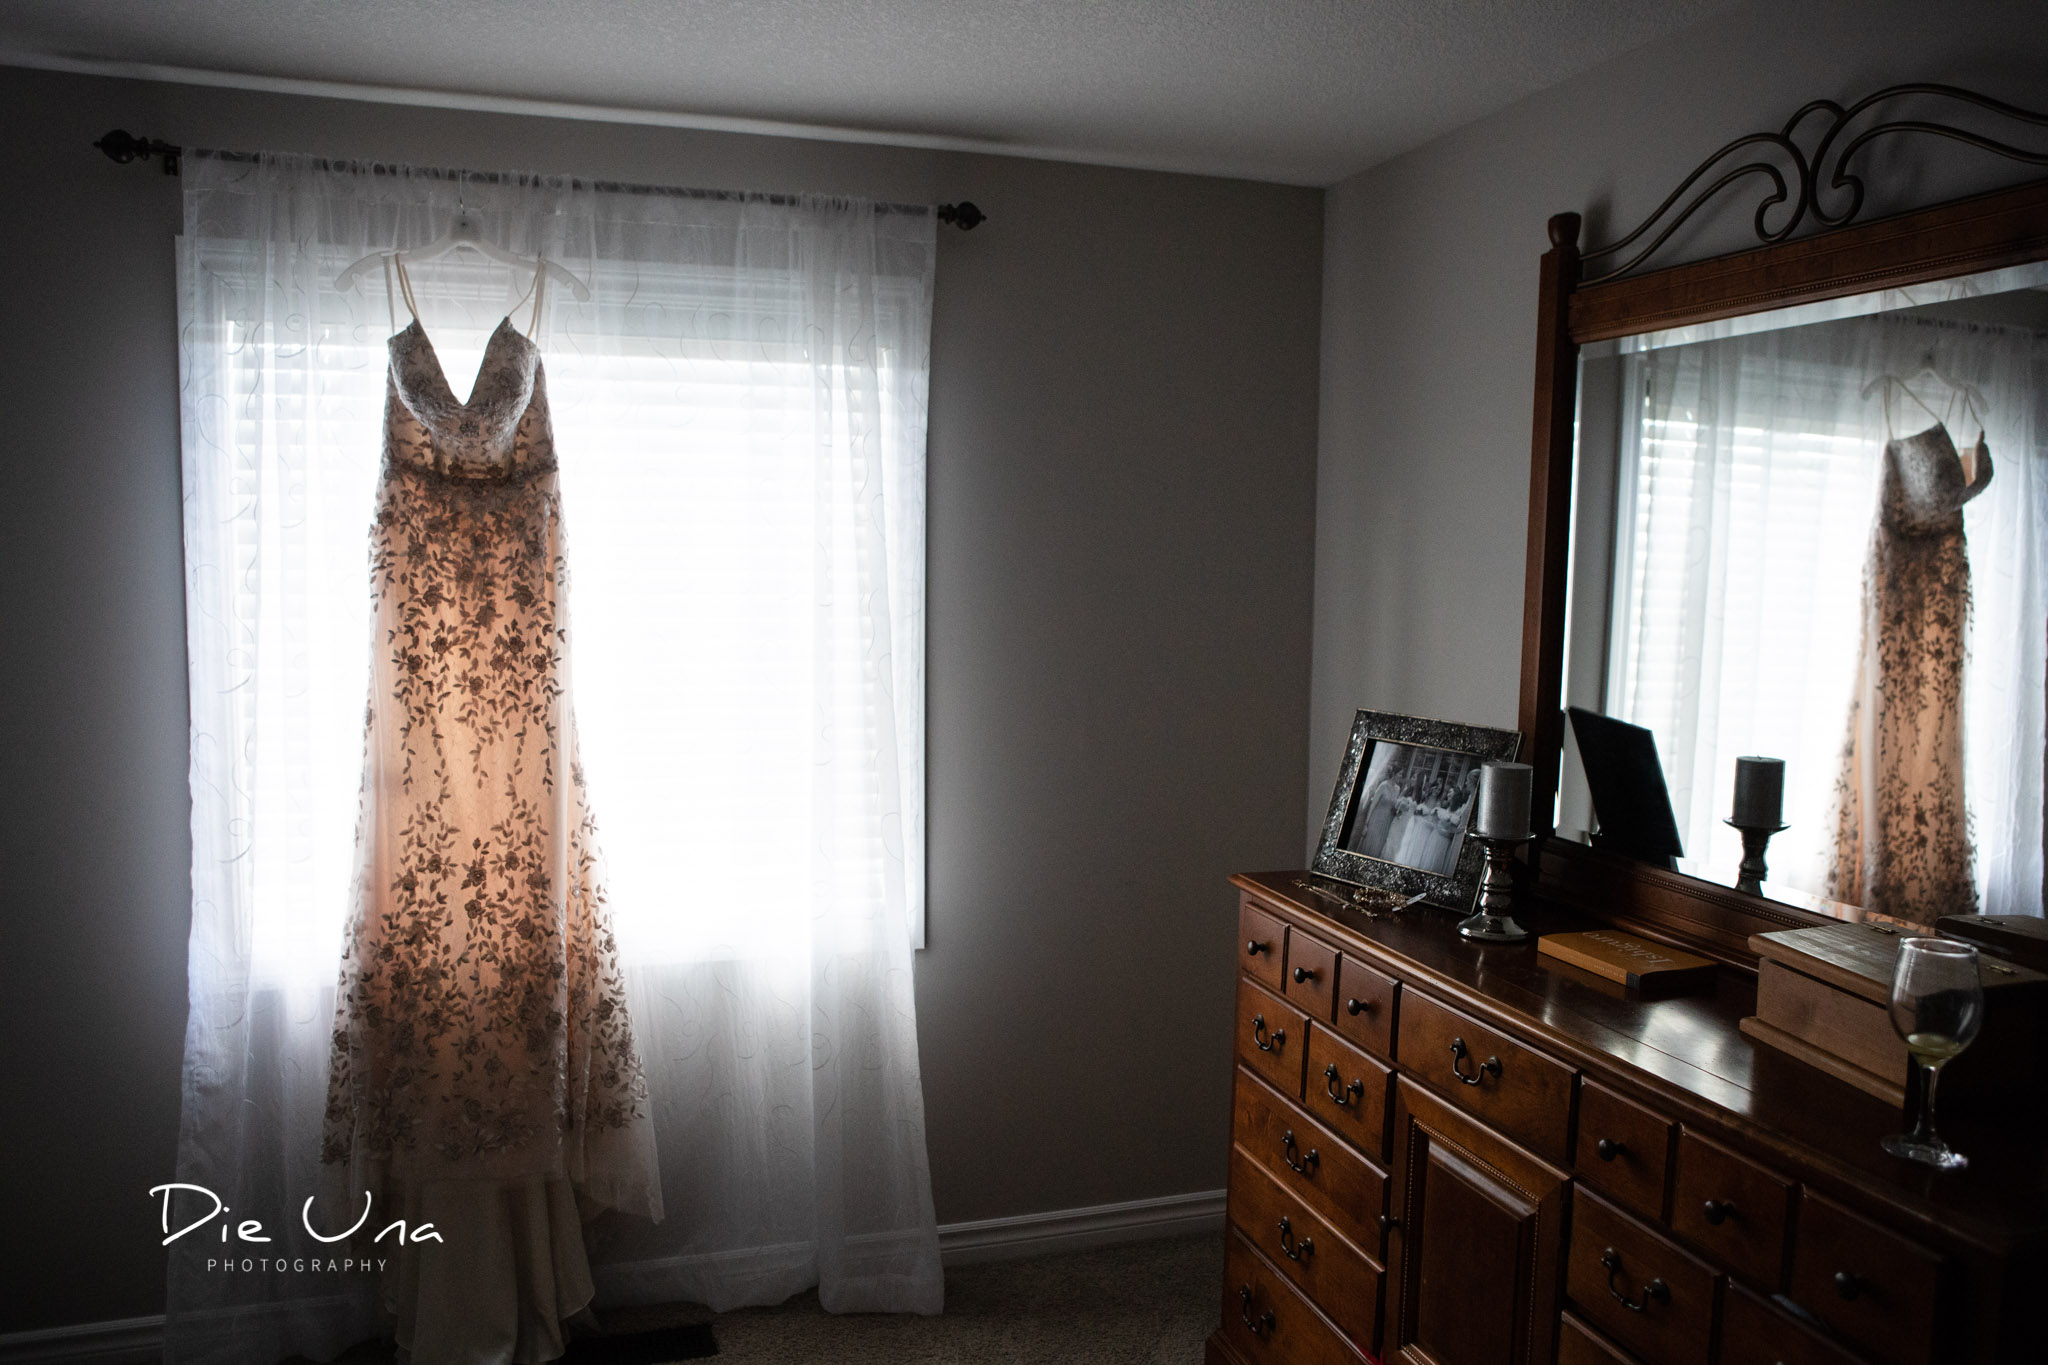 wedding dress hanging in window and reflected in dresser mirror.jpg